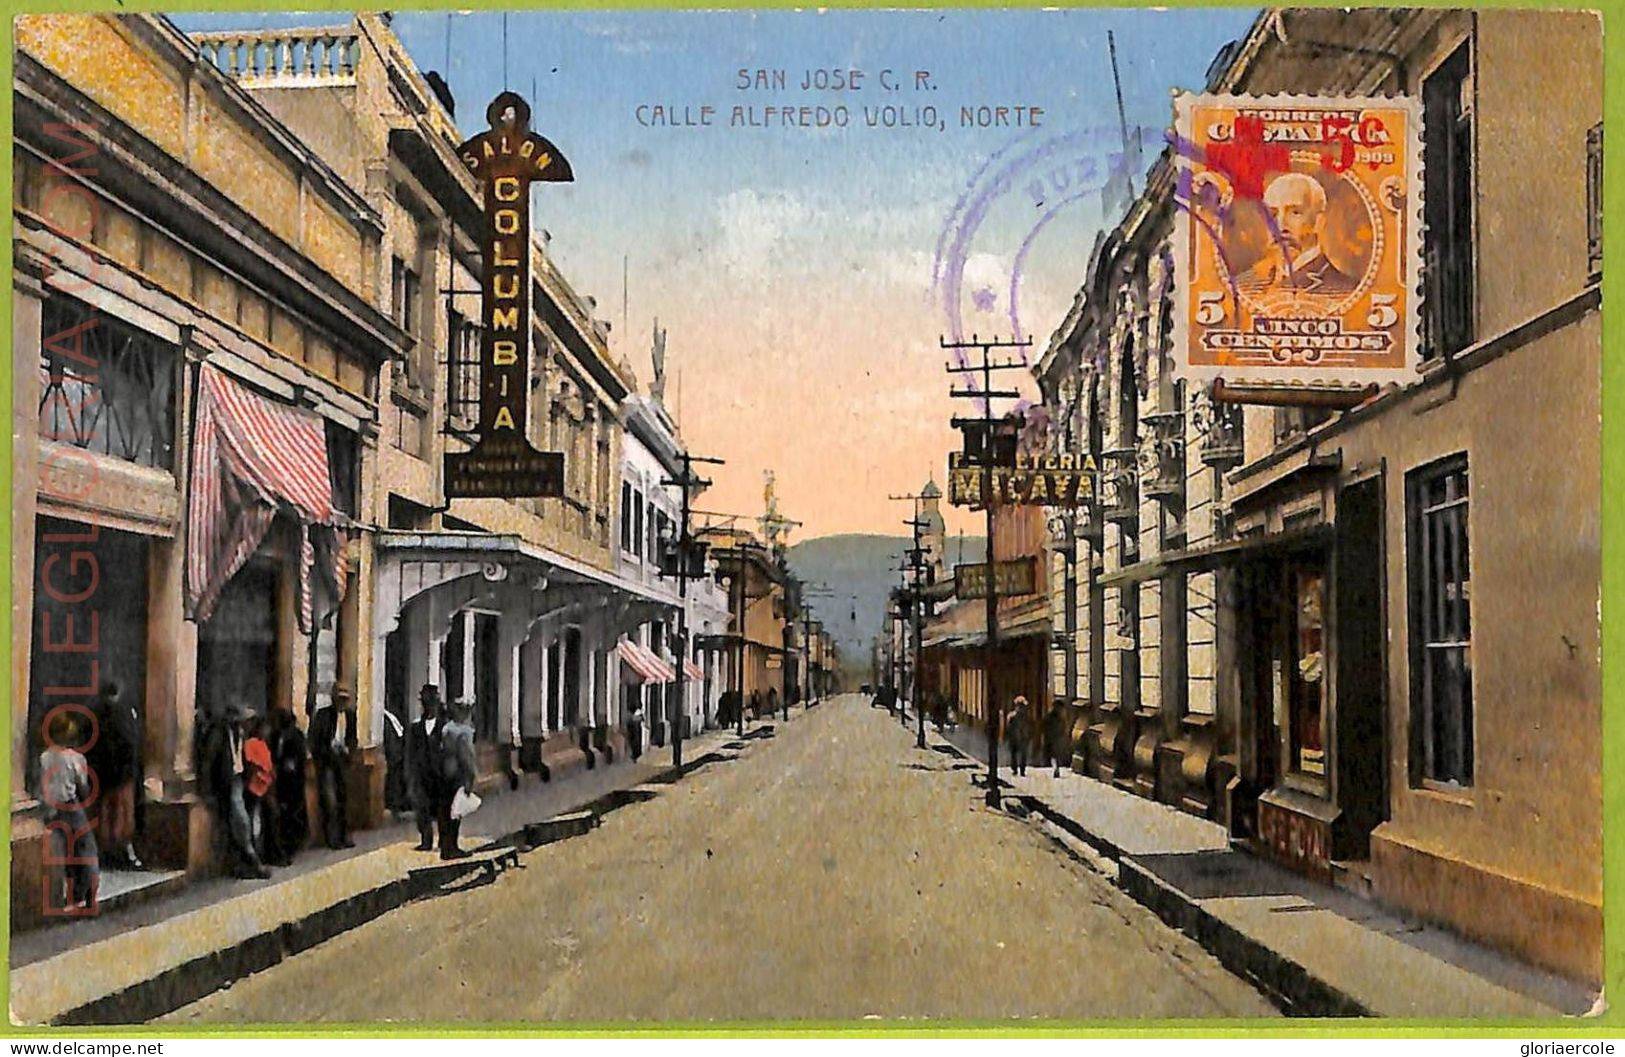 Aa6133 - COSTA RICA - Vintage Postcard - San Jose - Costa Rica